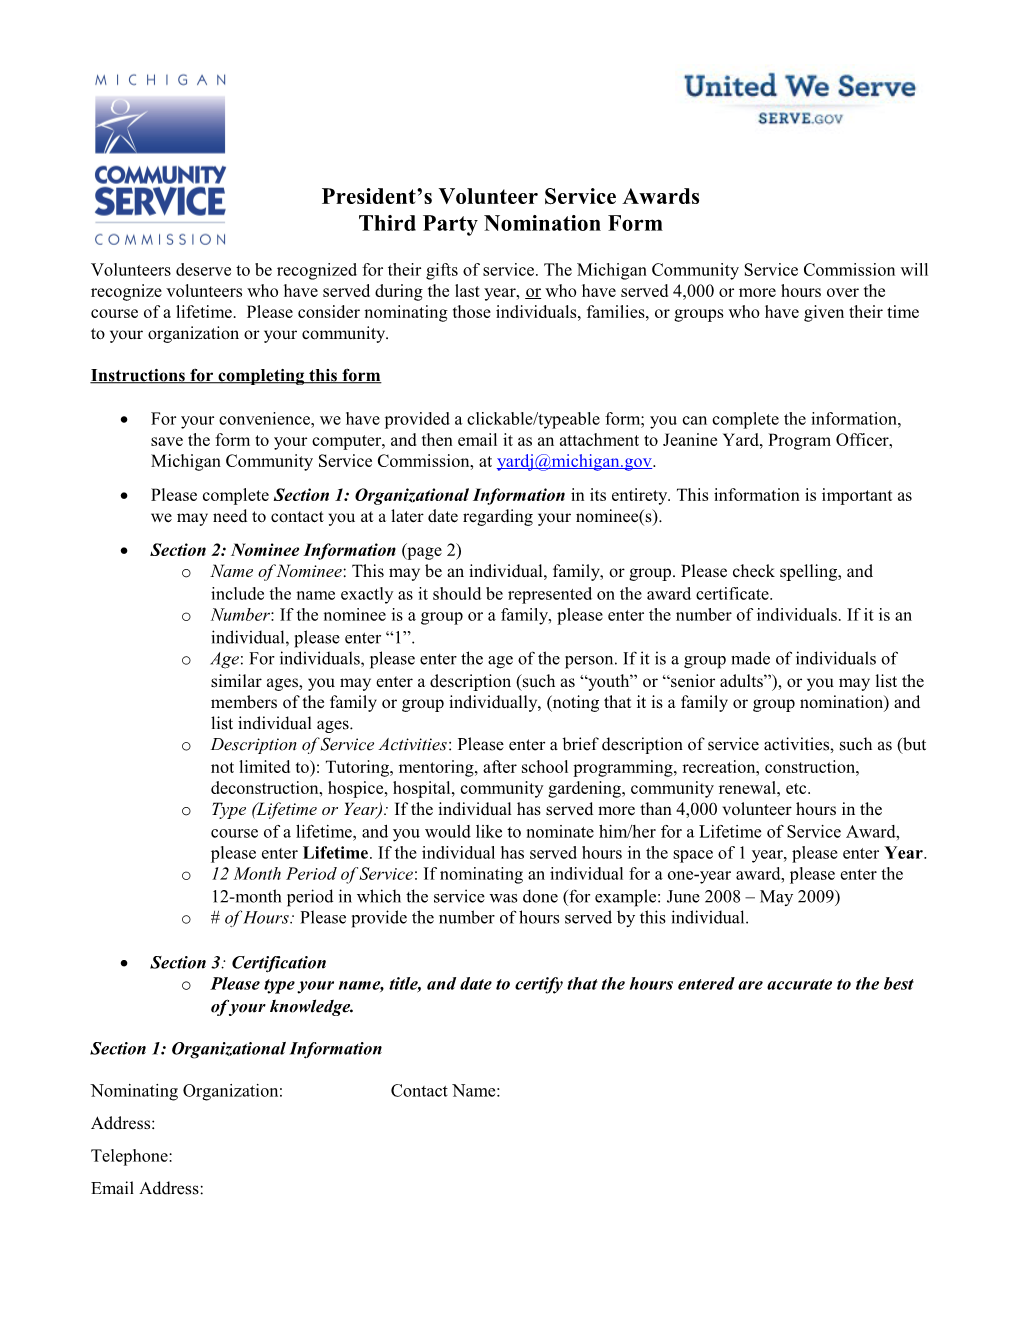 Presidents Volunteer Service Awards Nomination Form